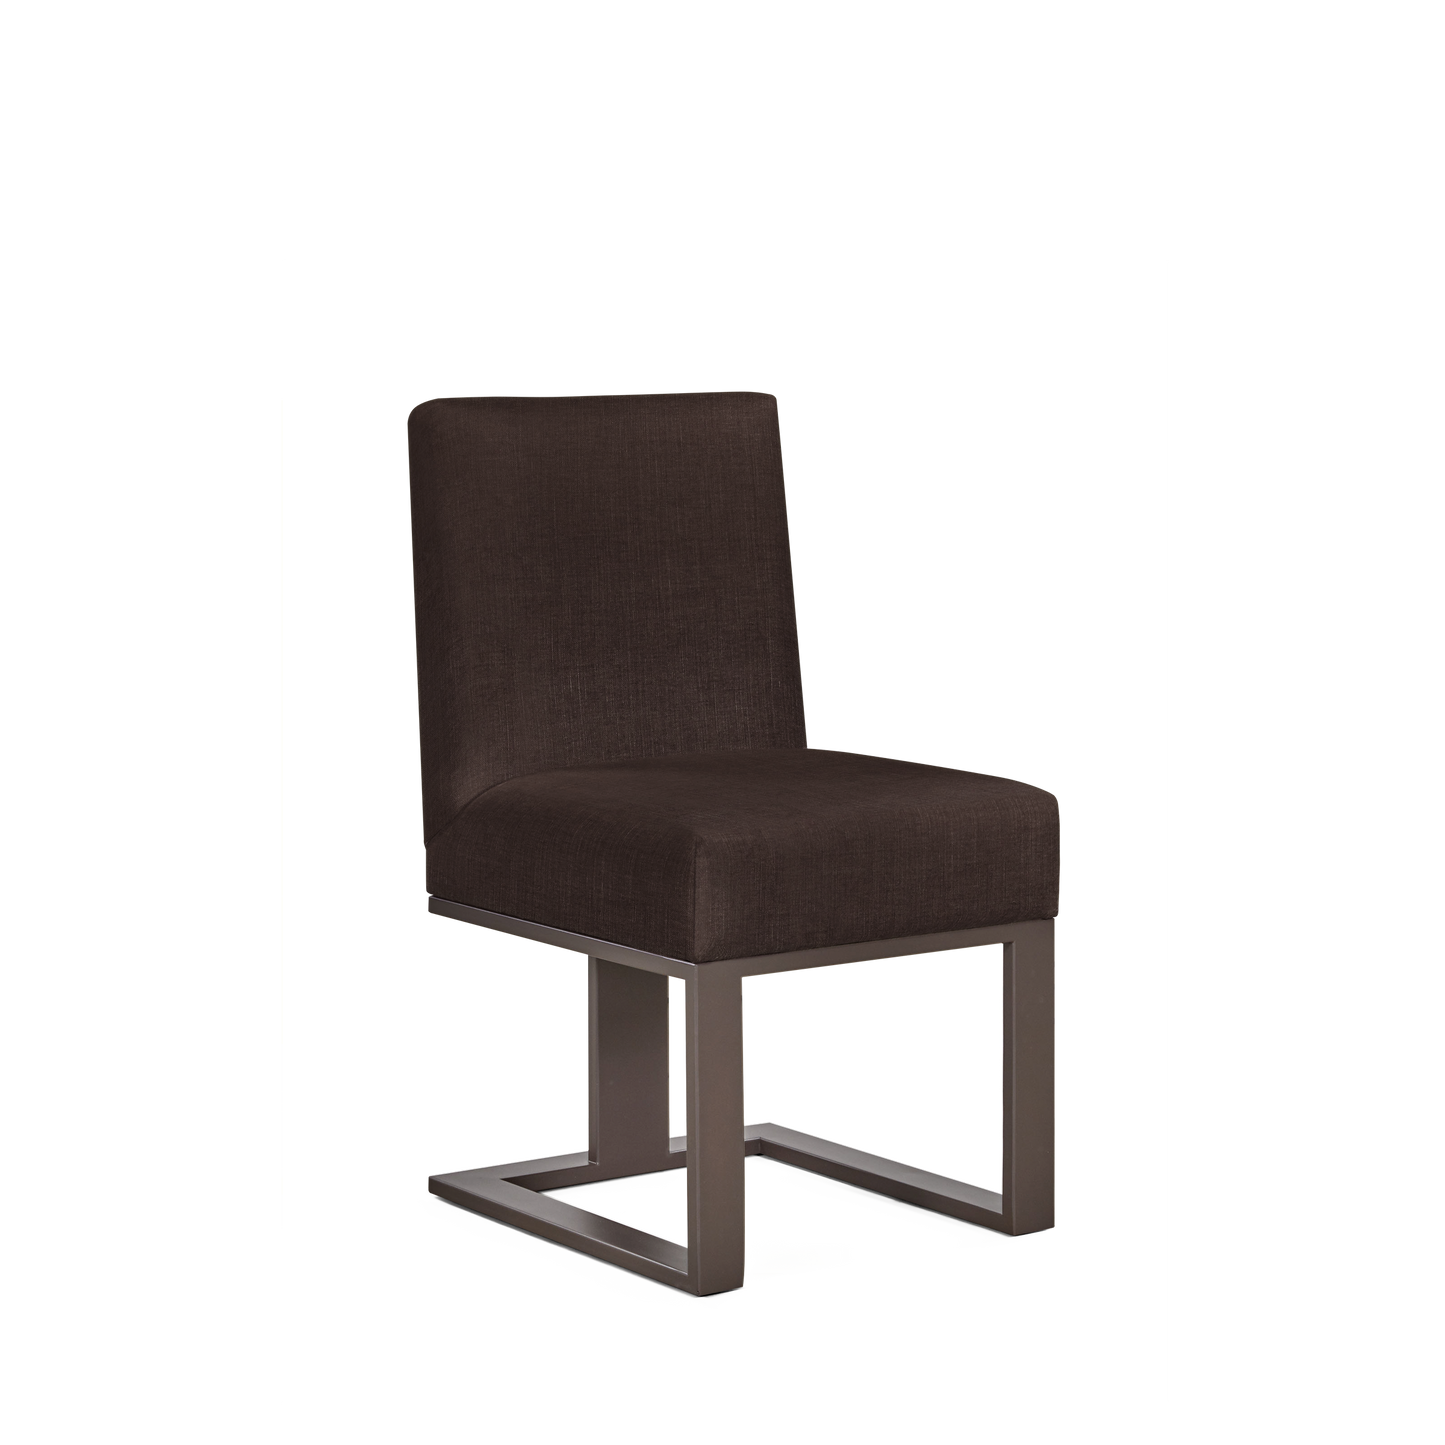 Len chair with linara brown textile and moka wood legs 